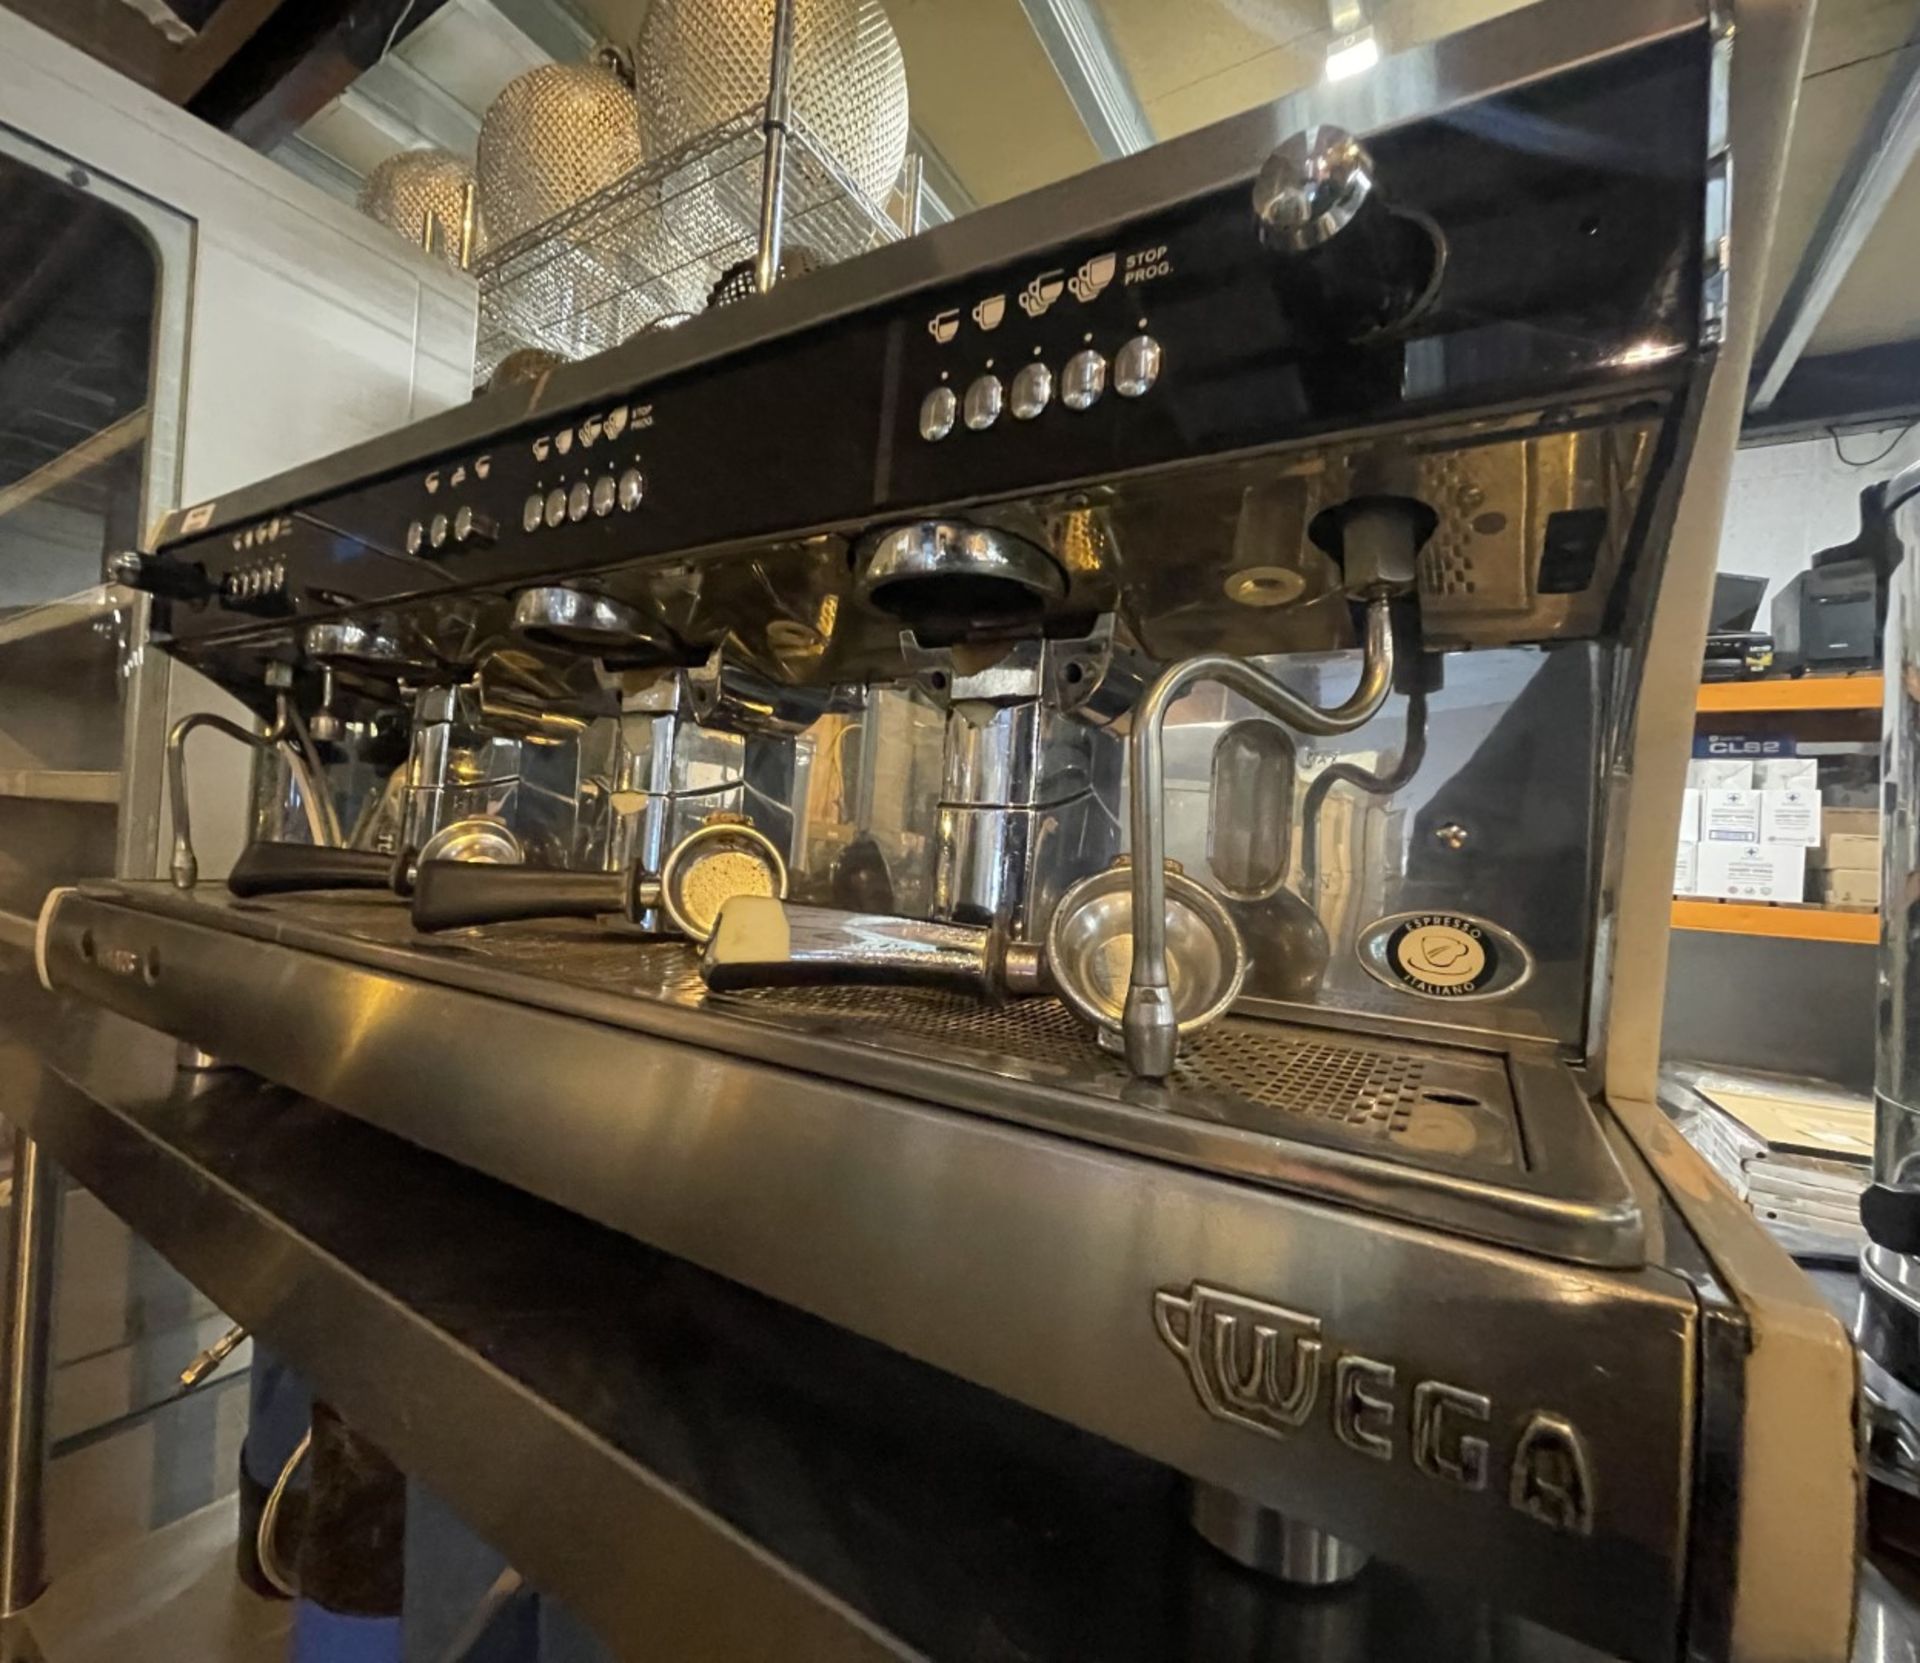 1 x Polaris Wega 3 Group Commercial Espresso Coffee Machine - Stainless Steel / Black Exterior - 3 P - Image 7 of 9